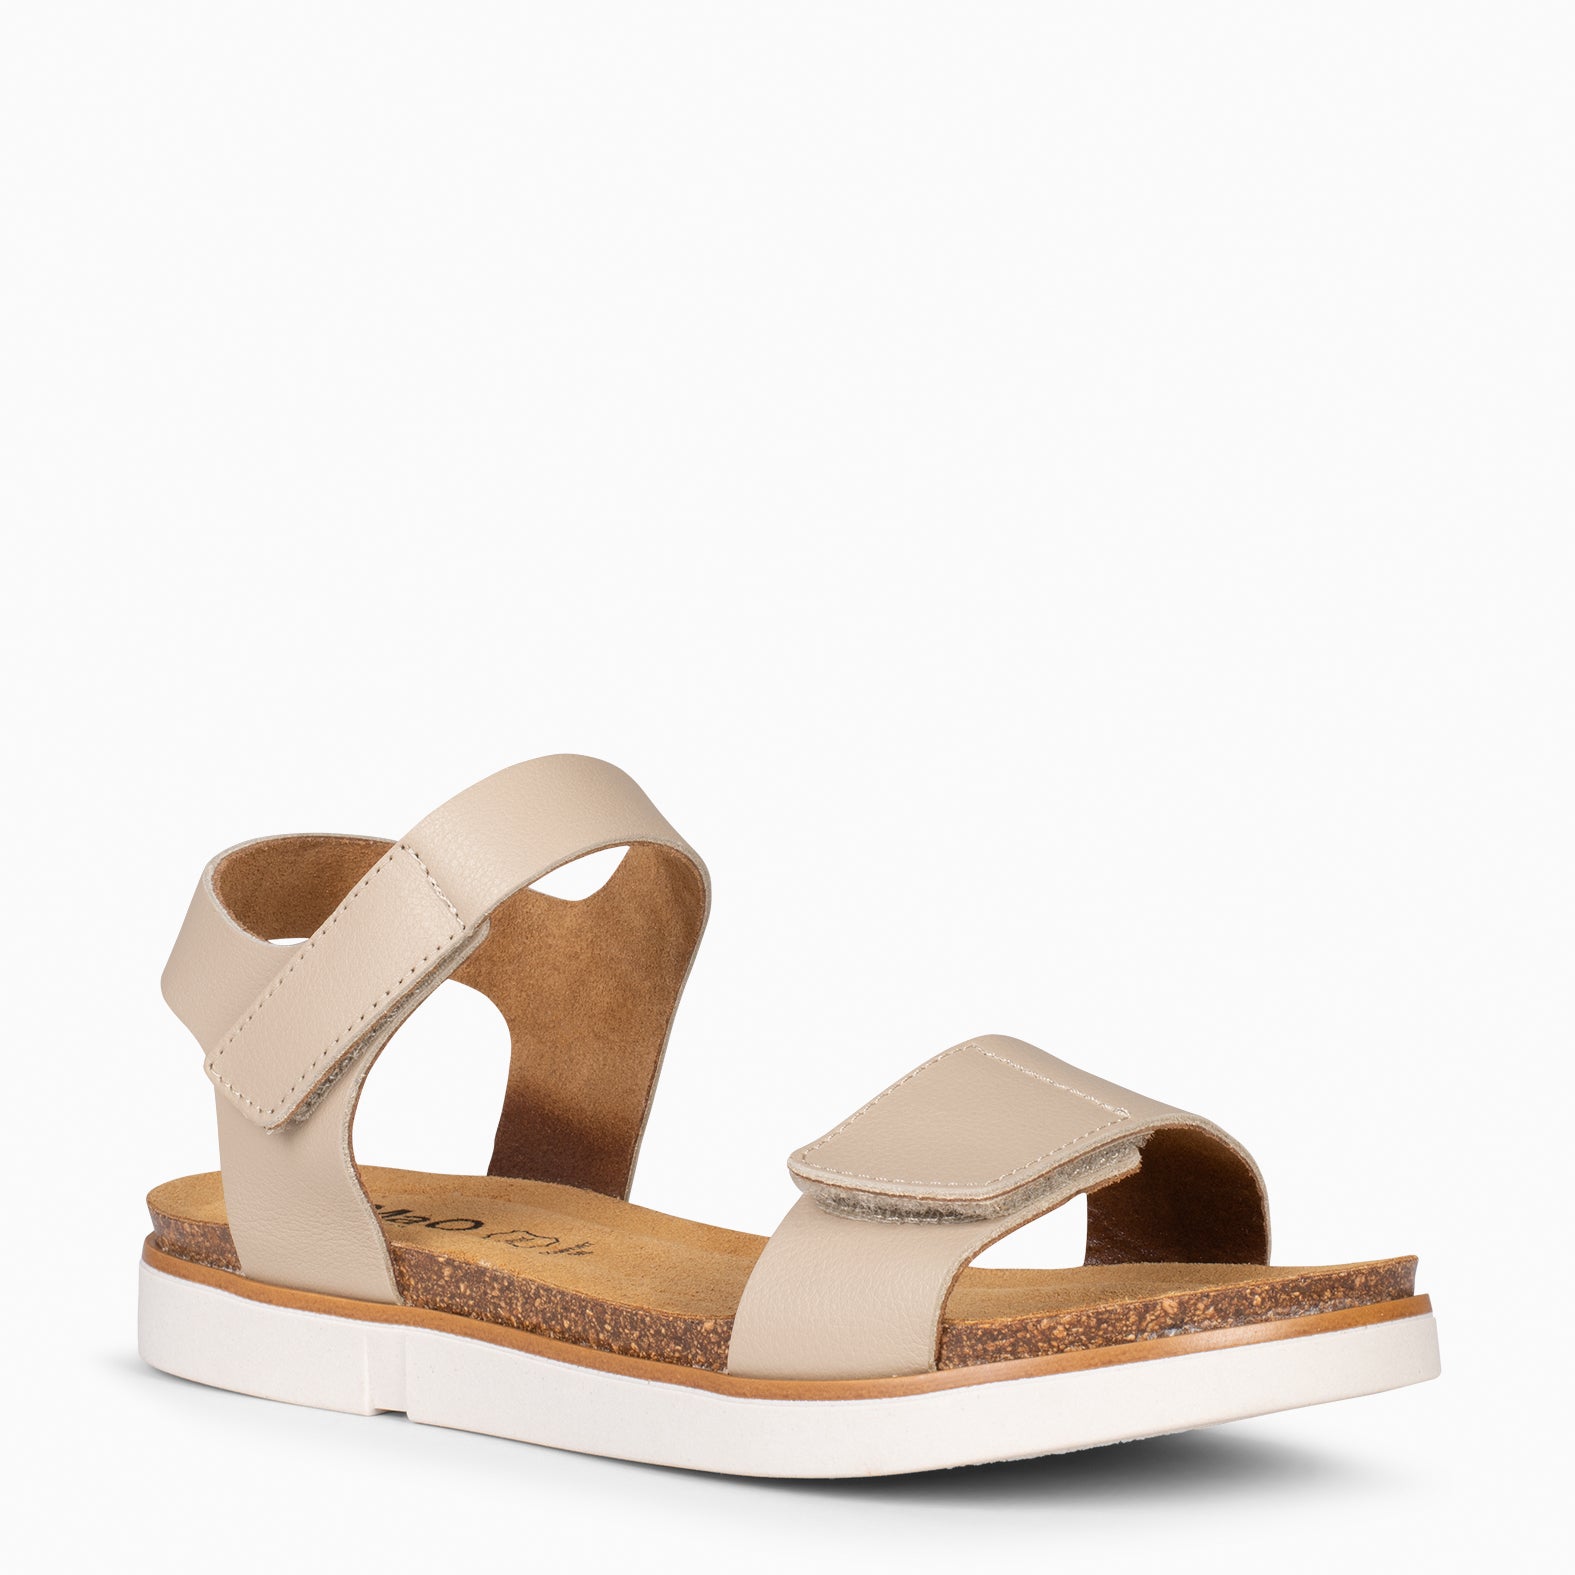 ARALIA – TAUPE comfortable flat sandal